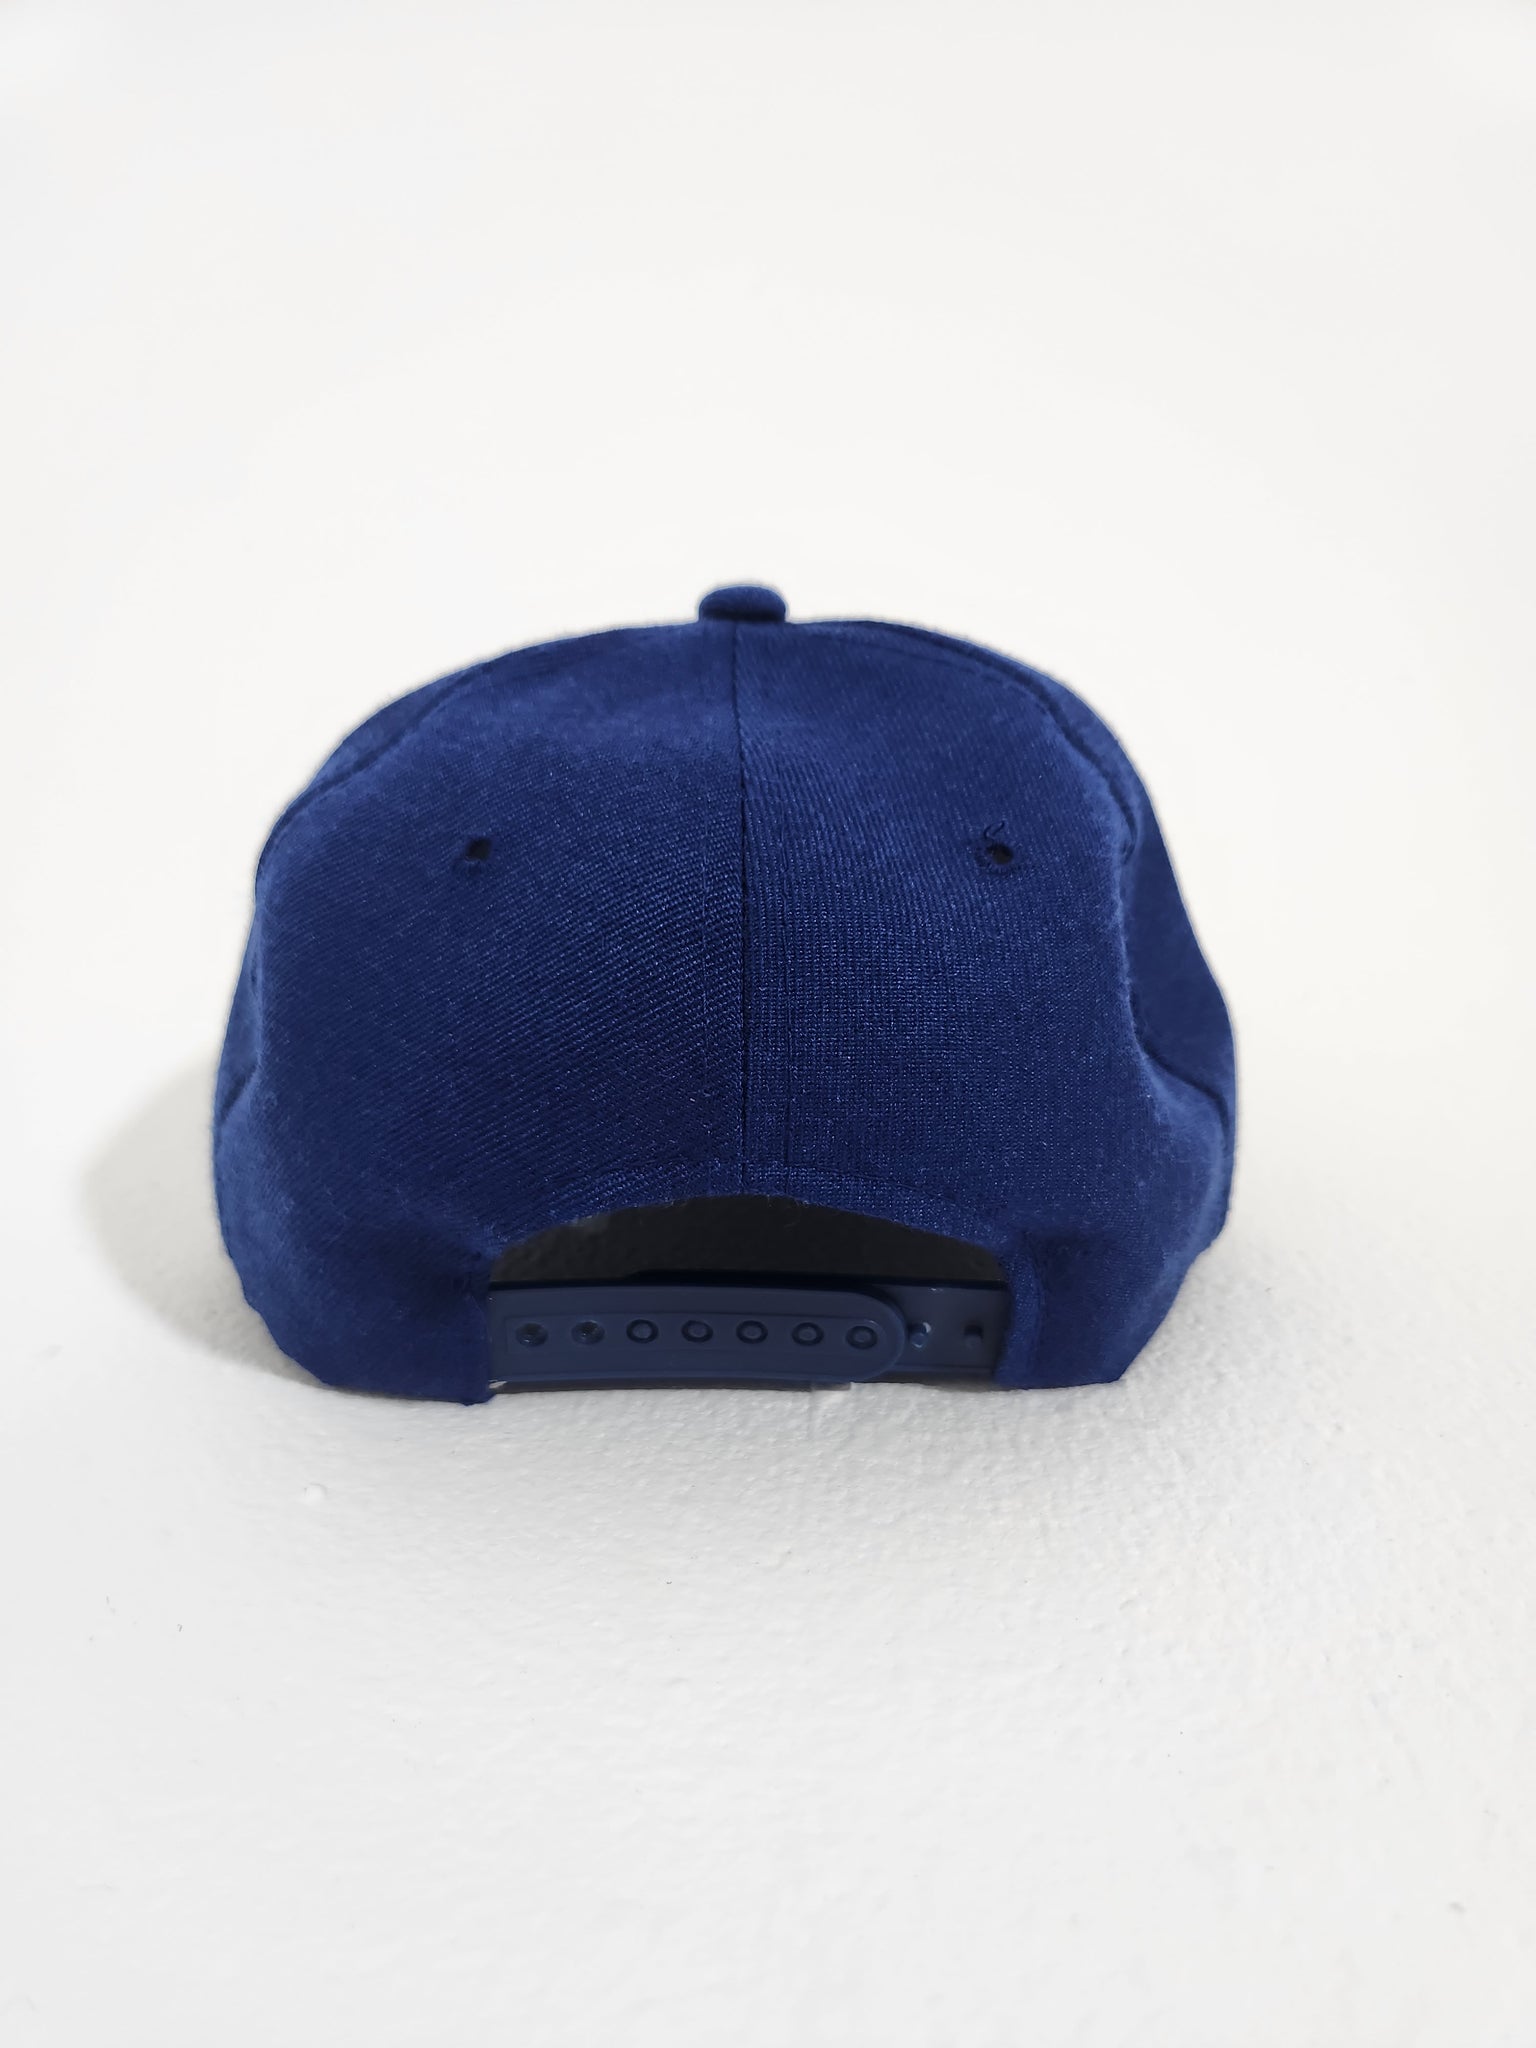 Rare Vintage SPORTS SPECIALTIES St. Louis Blues Nike Snapback Hat Cap 90s